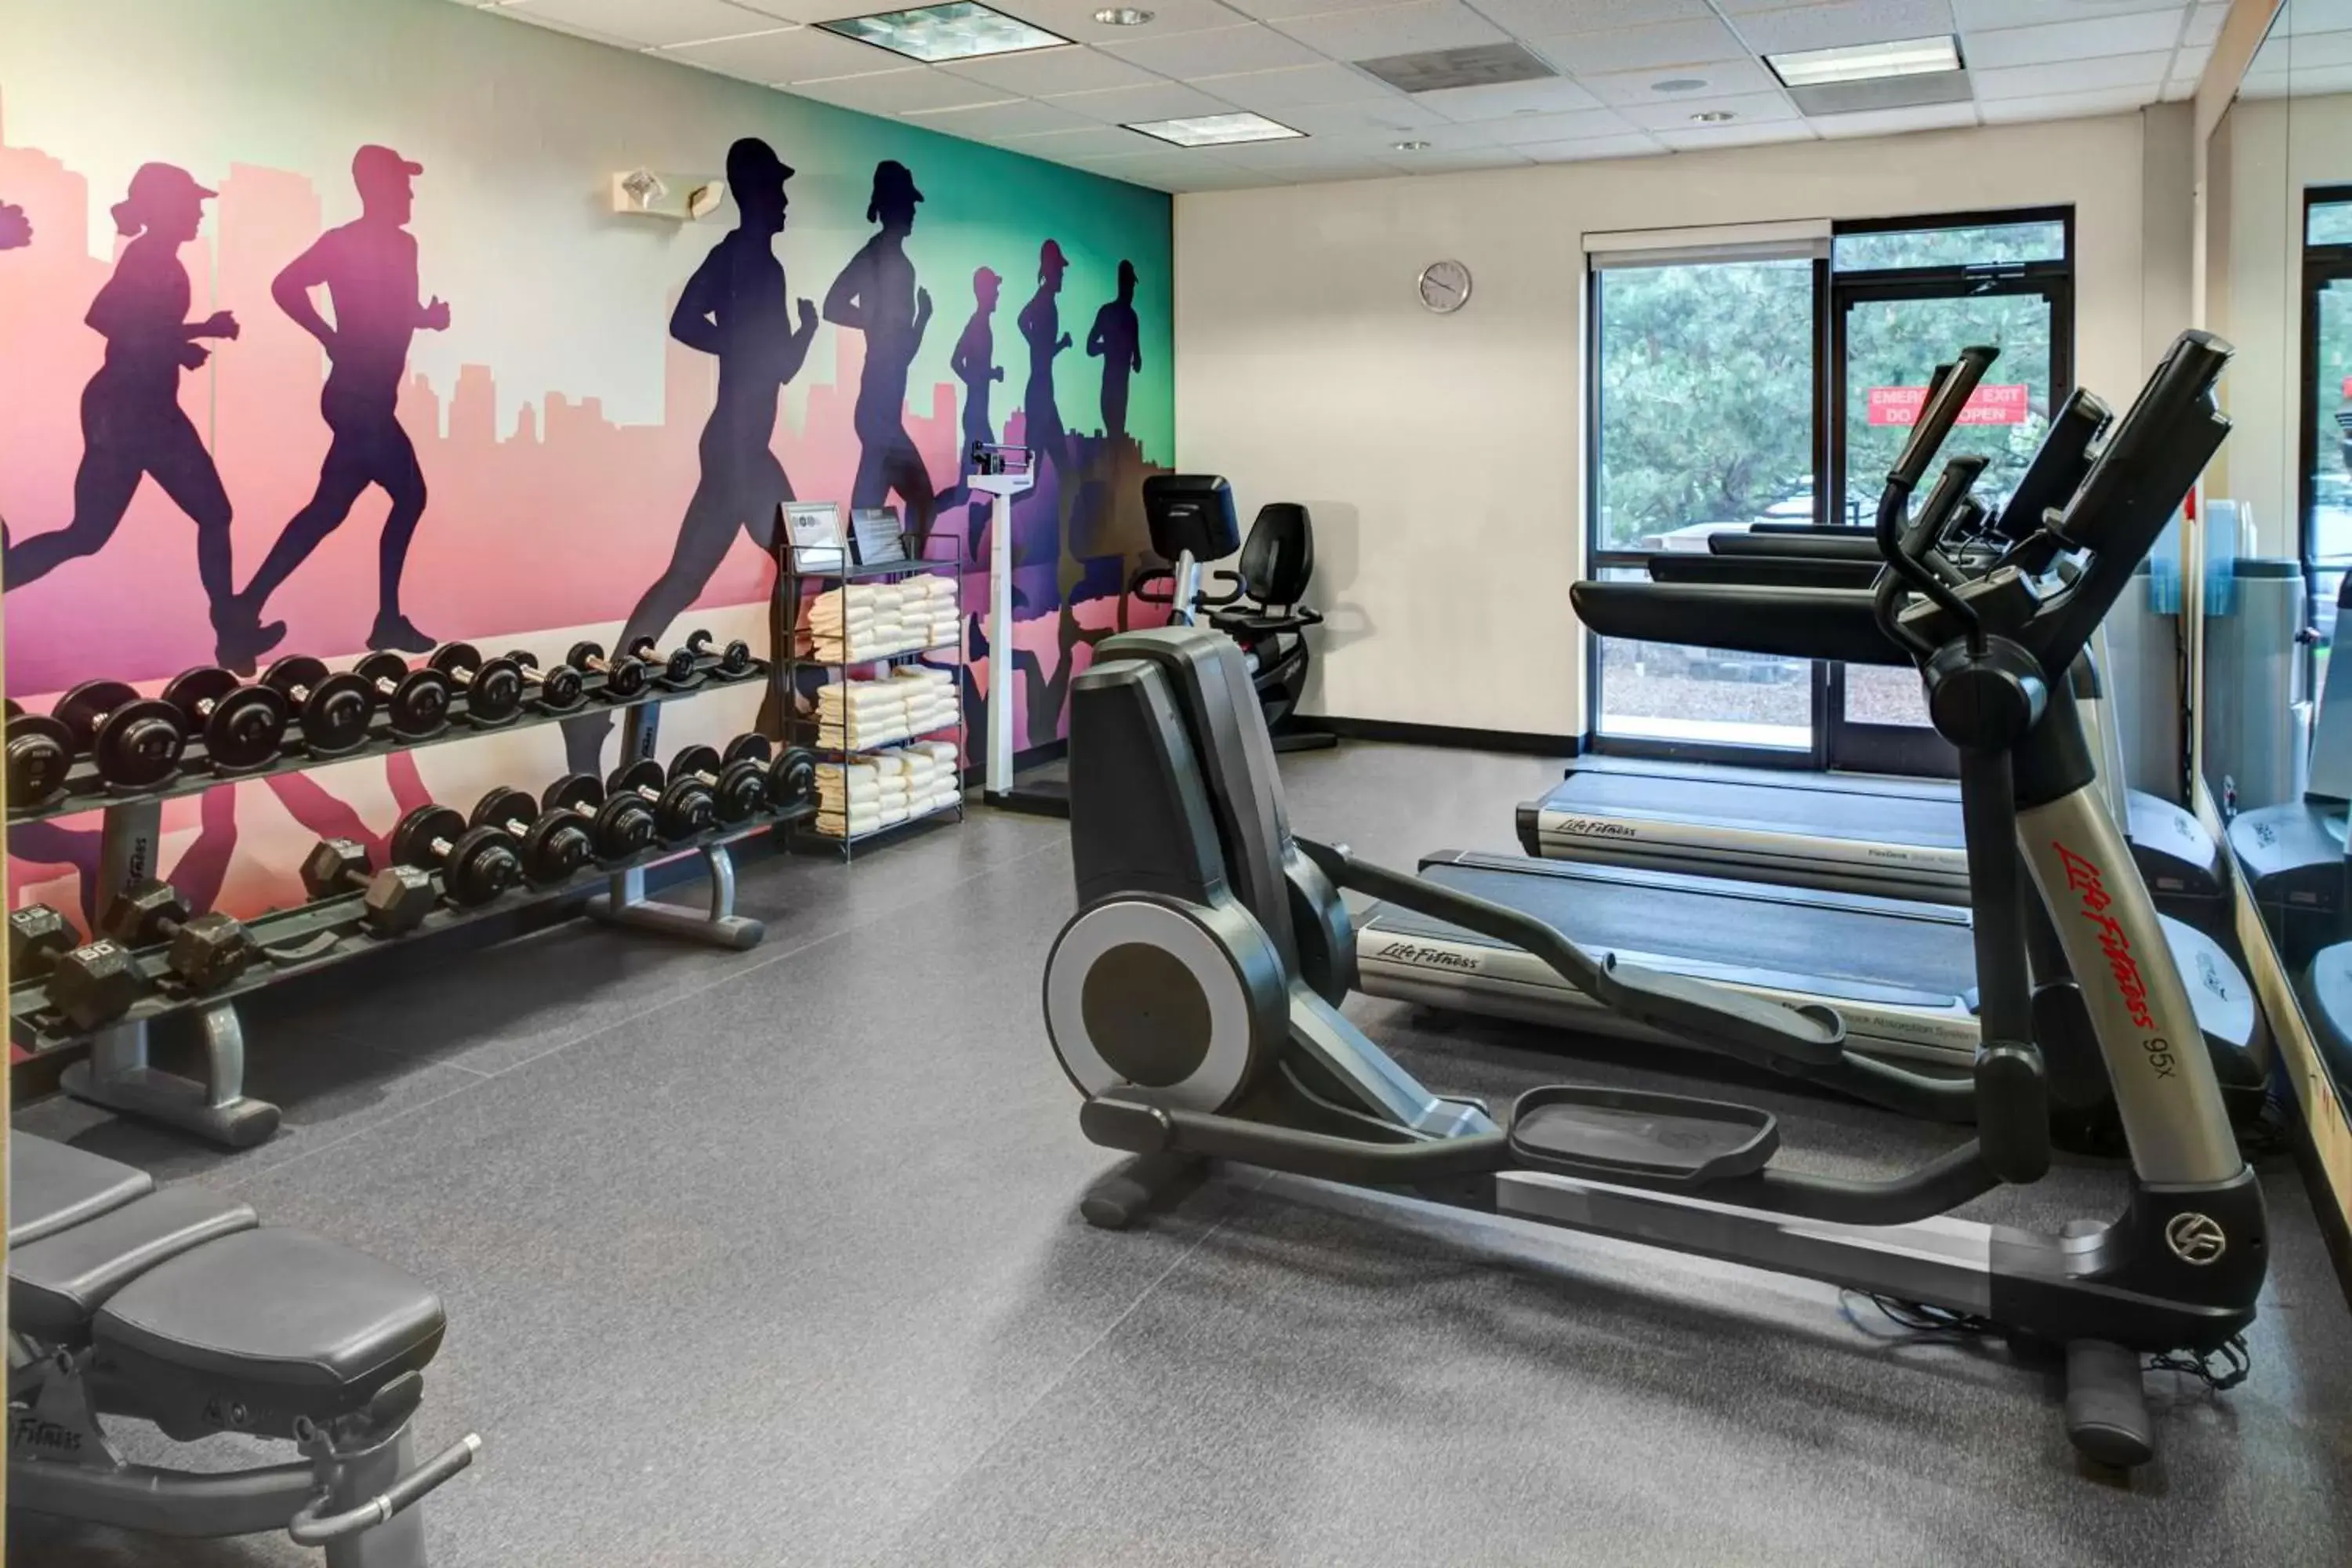 Fitness centre/facilities in Hyatt Place Lakeland Center